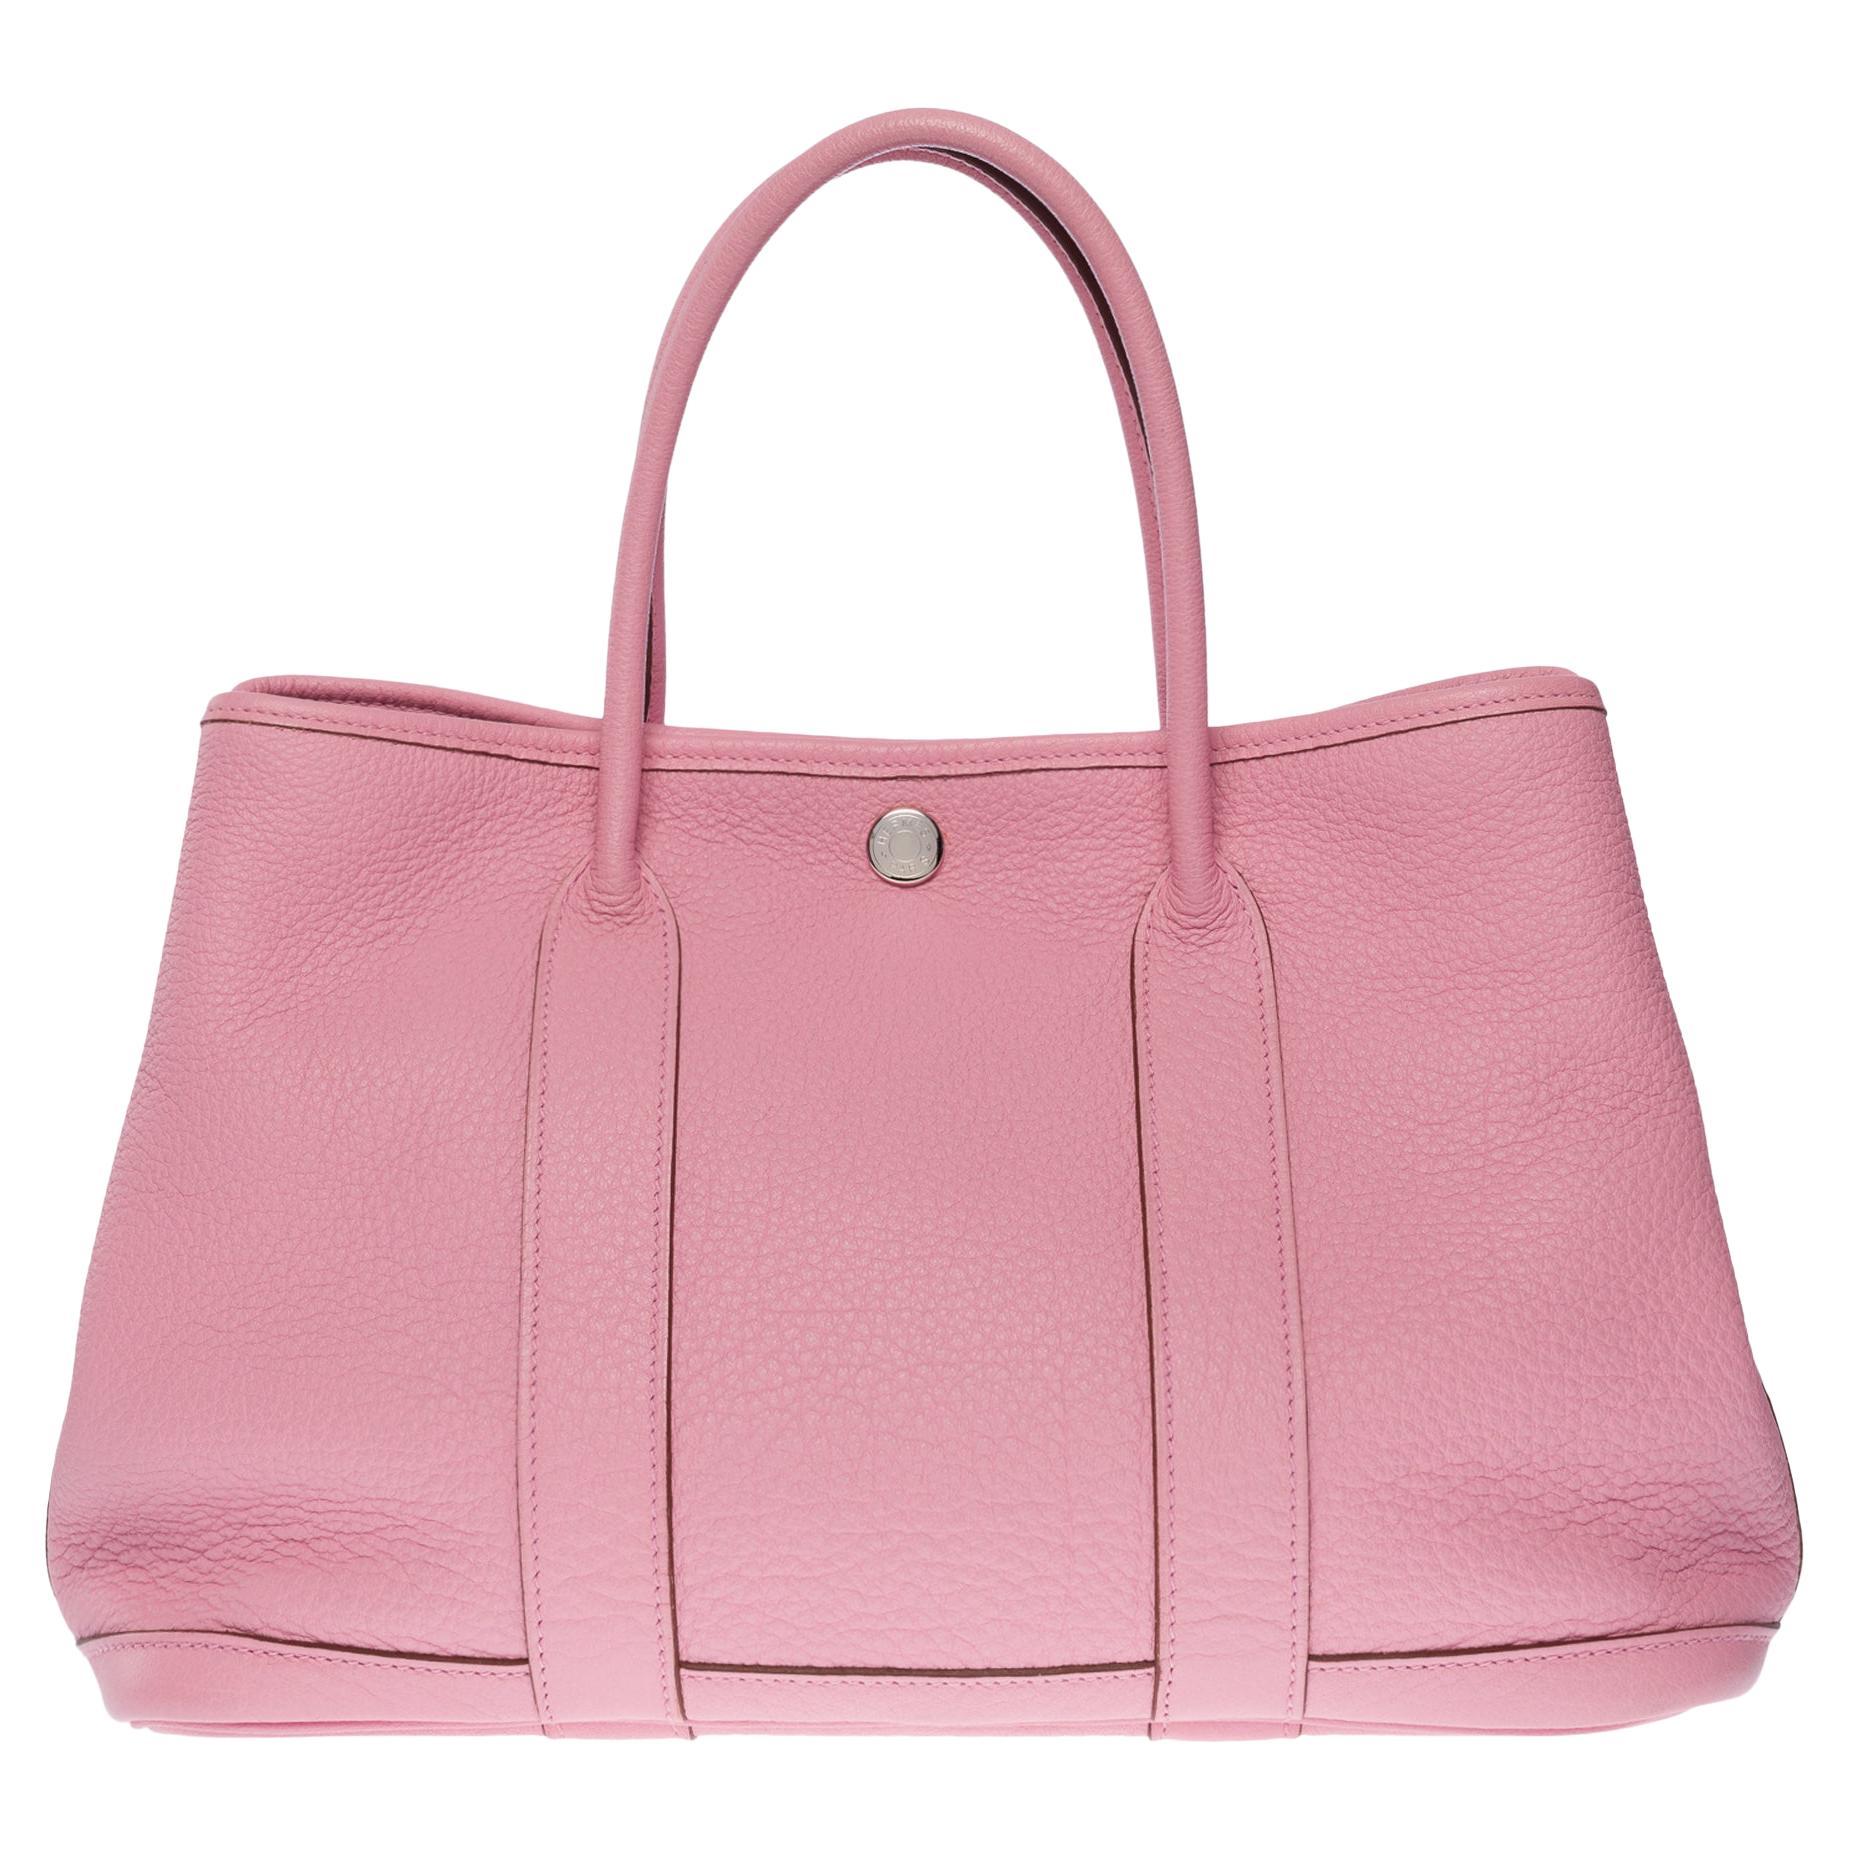 Gorgeous Hermès Garden Party TPM Tote bag in Sakura Pink Negonda leather, SHW For Sale